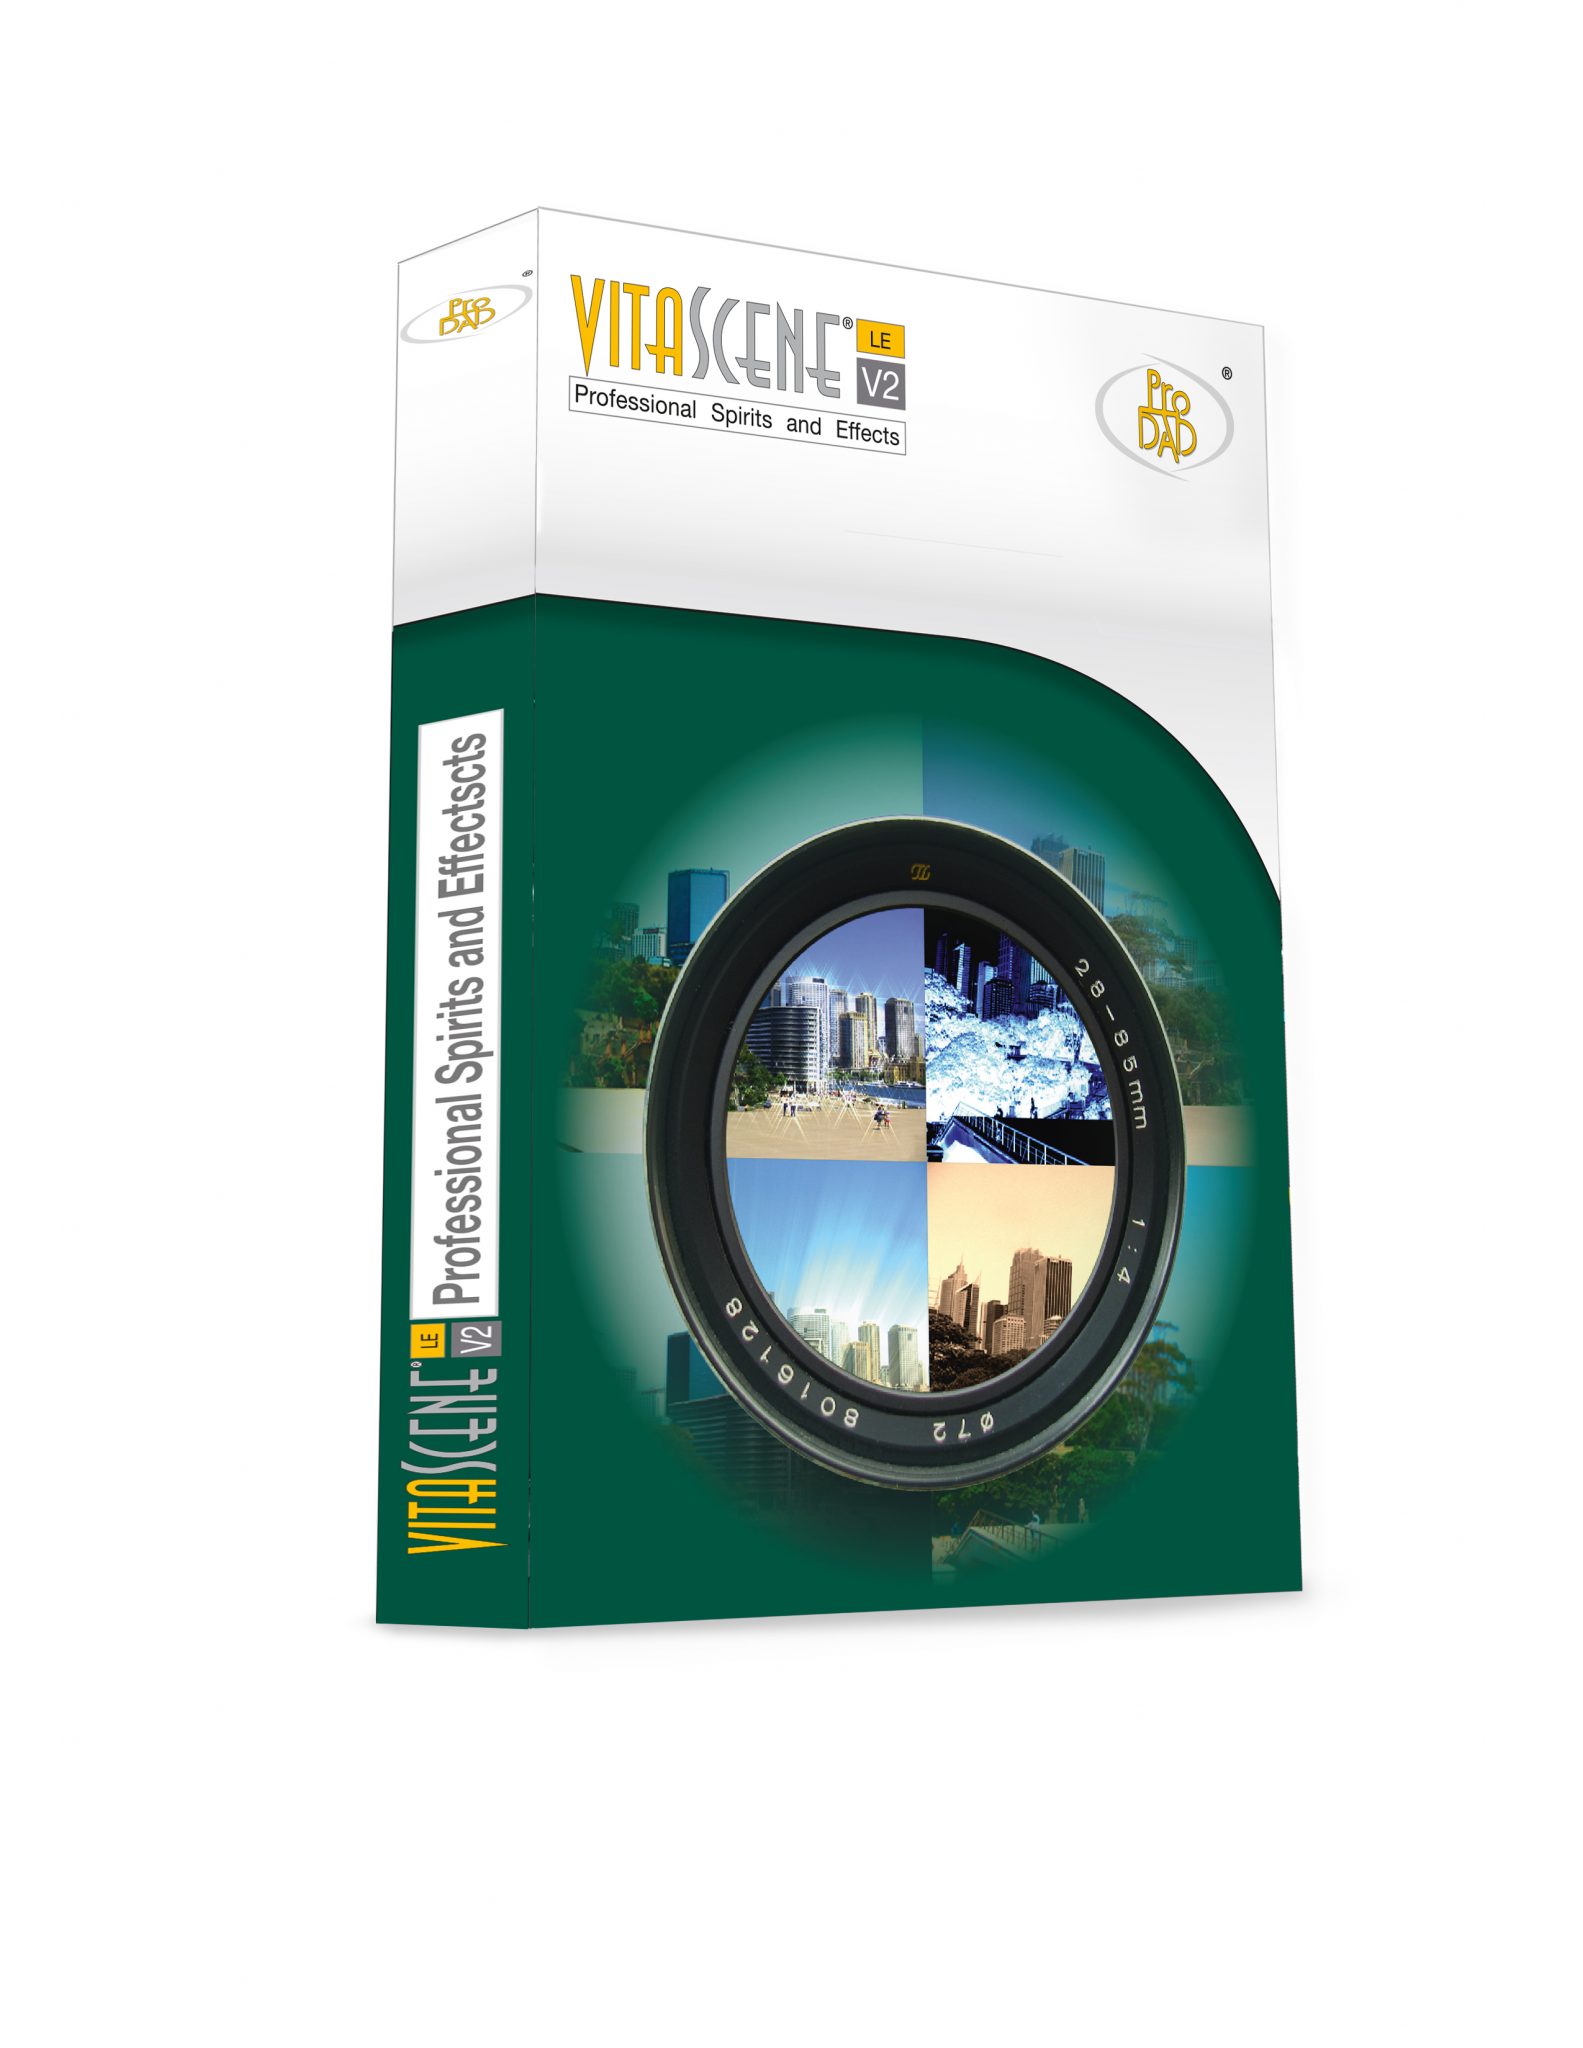 proDAD VitaScene 5.0.313 for ipod download